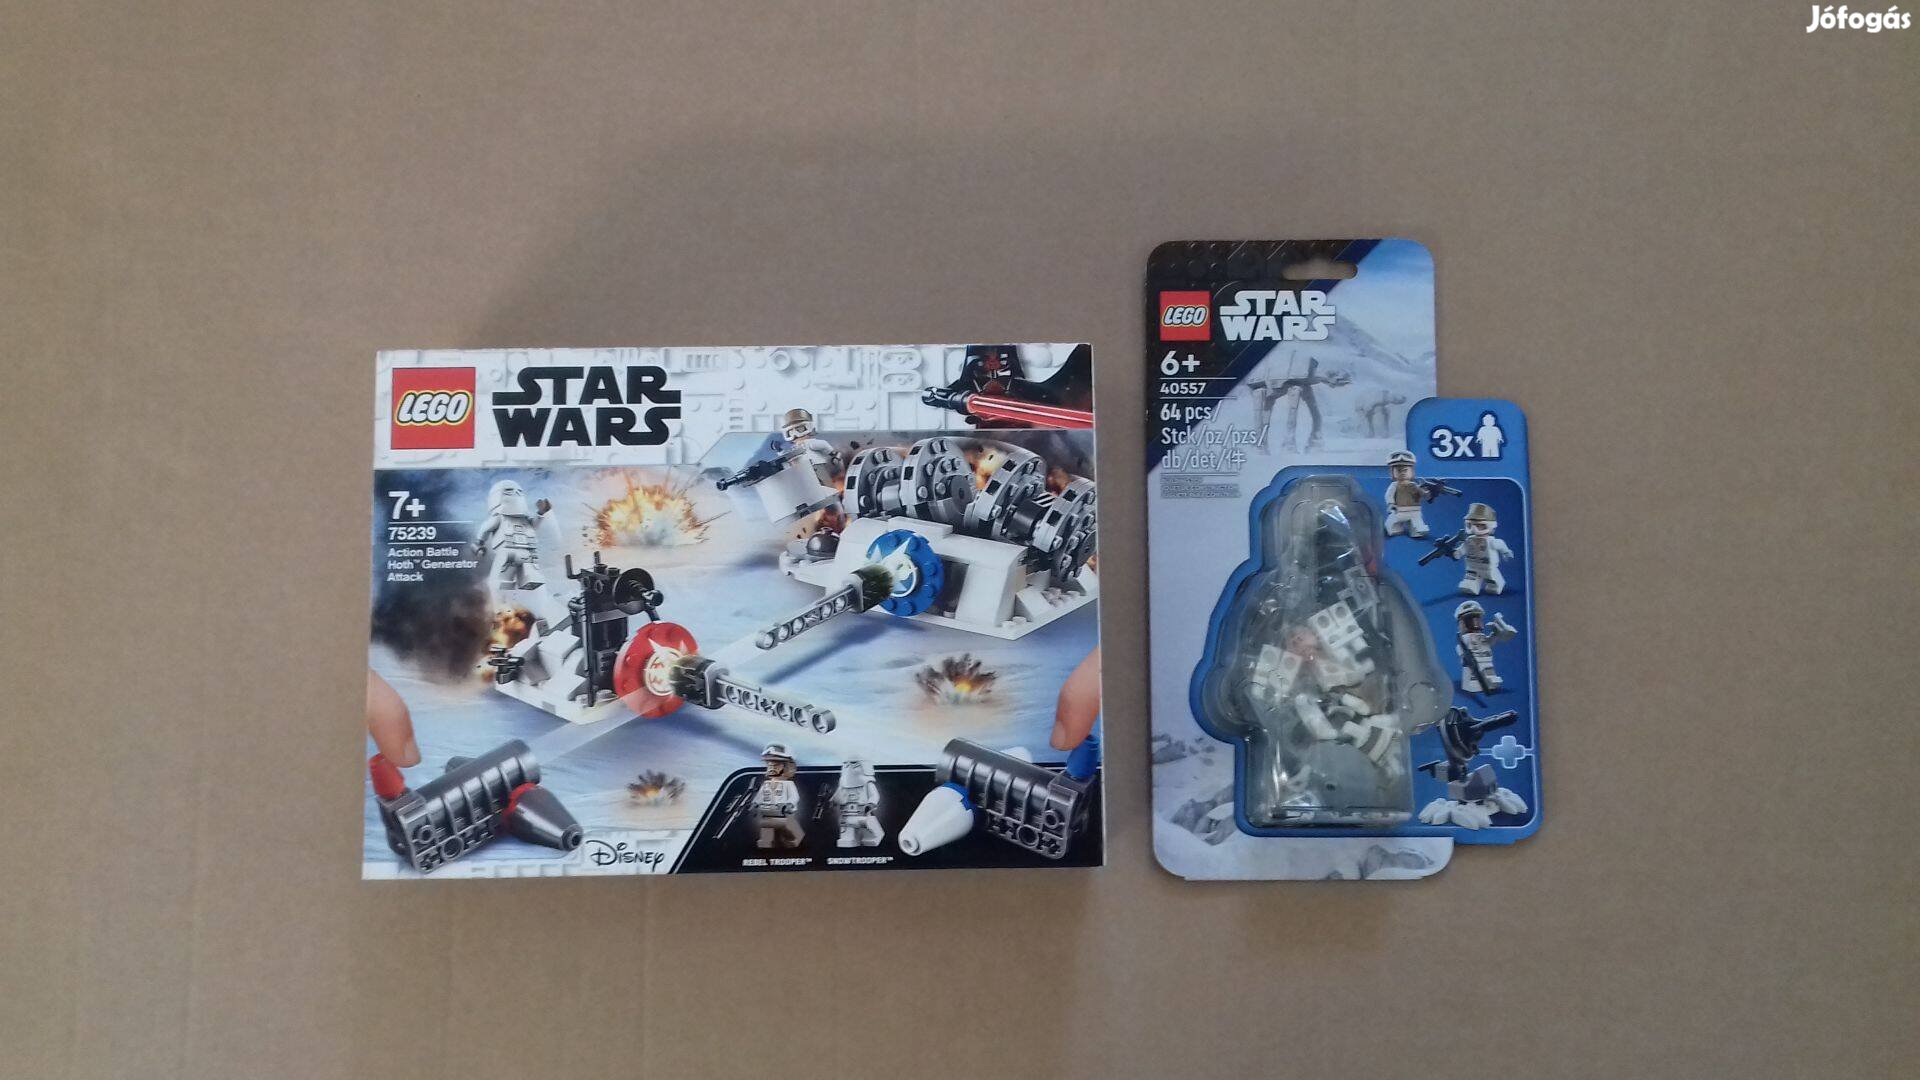 Hothi csata: bontatlan Star Wars LEGO 75239 Generátor + 40577 Fox.árba